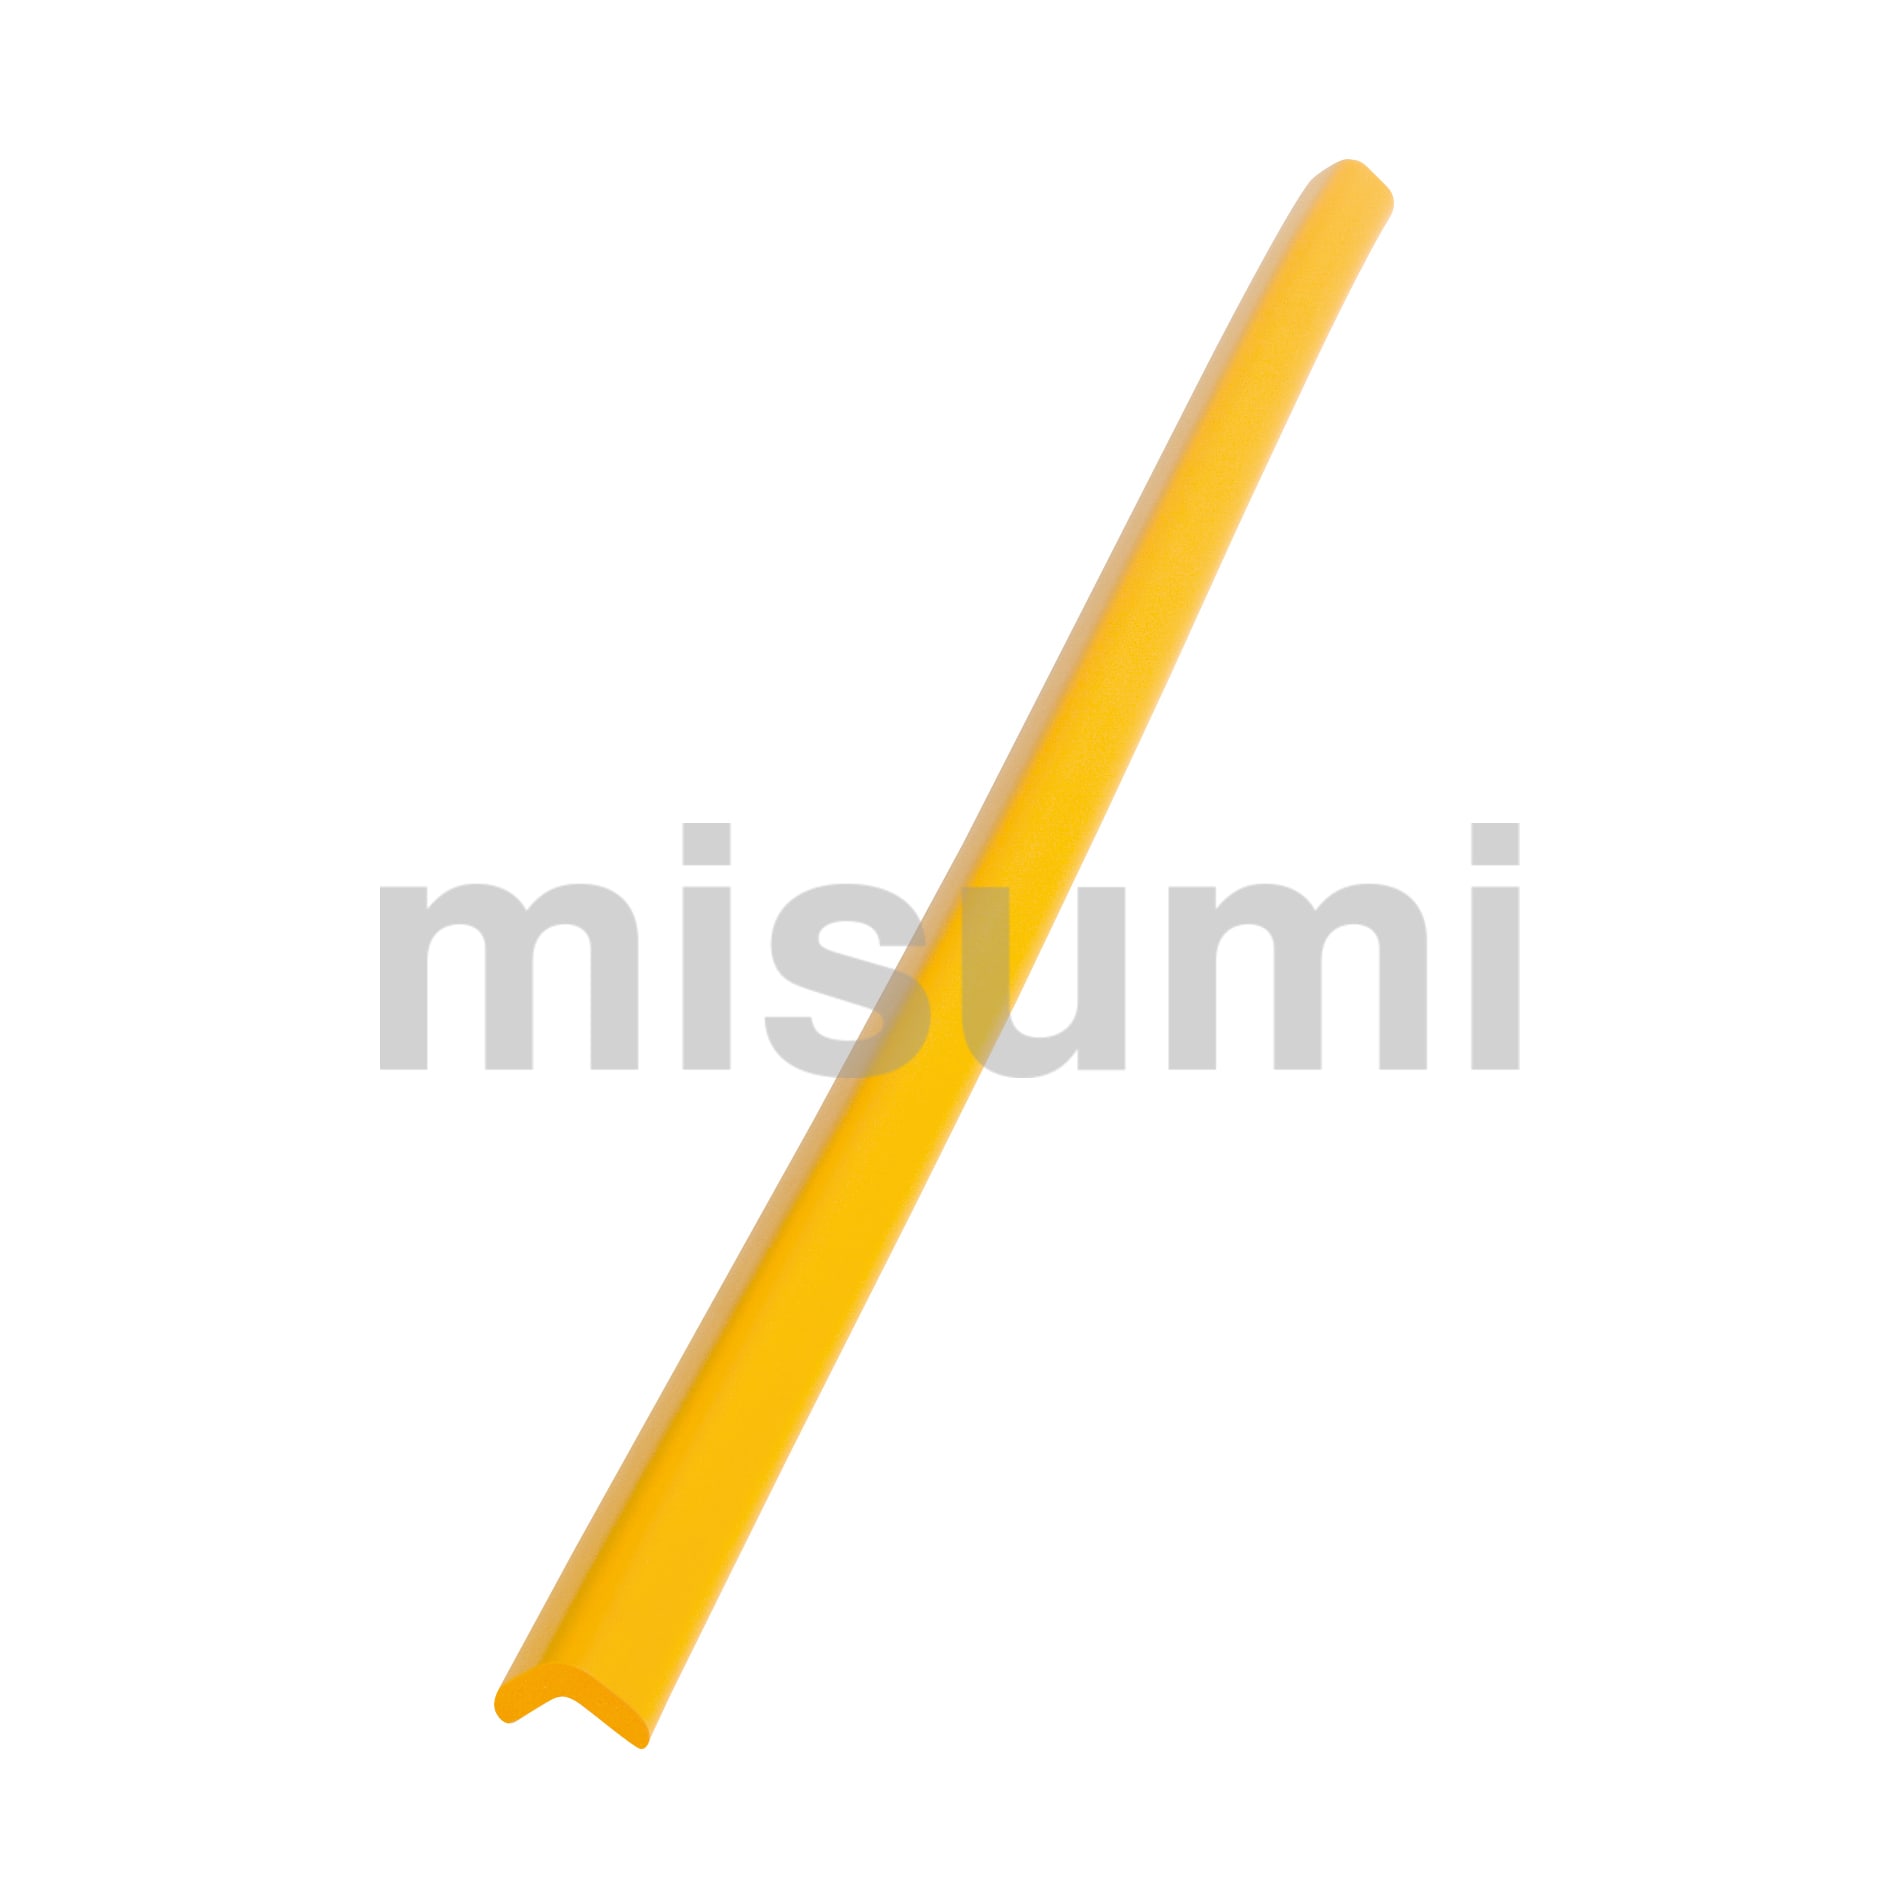 10-50mm 回転灯用クランプ エスコ MISUMI(ミスミ)